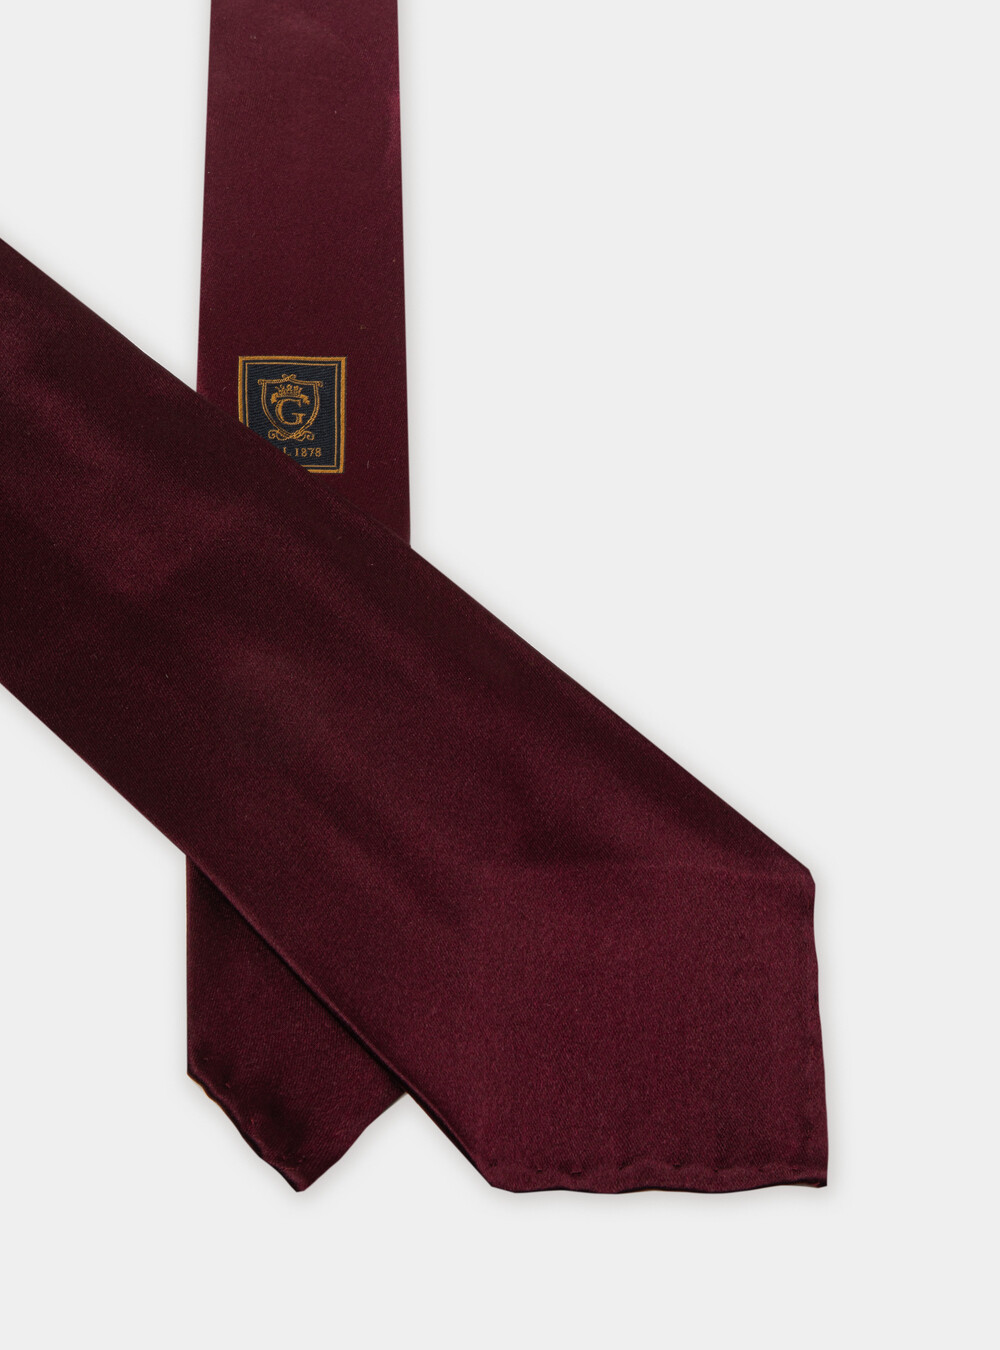 Cravate en soie unie | GutteridgeEU | Cravates Uomo